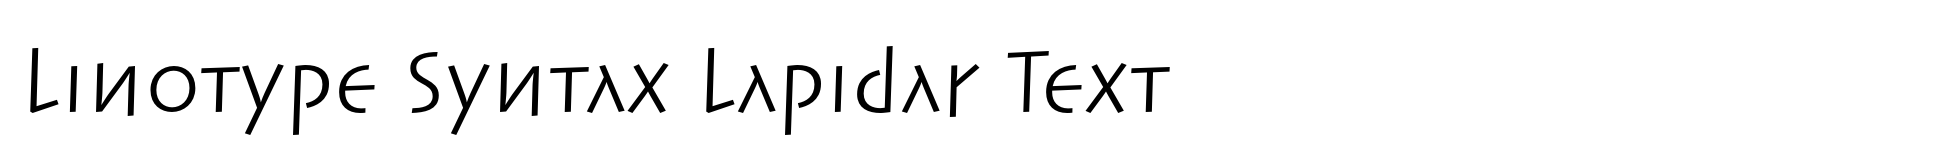 Linotype Syntax Lapidarer Text